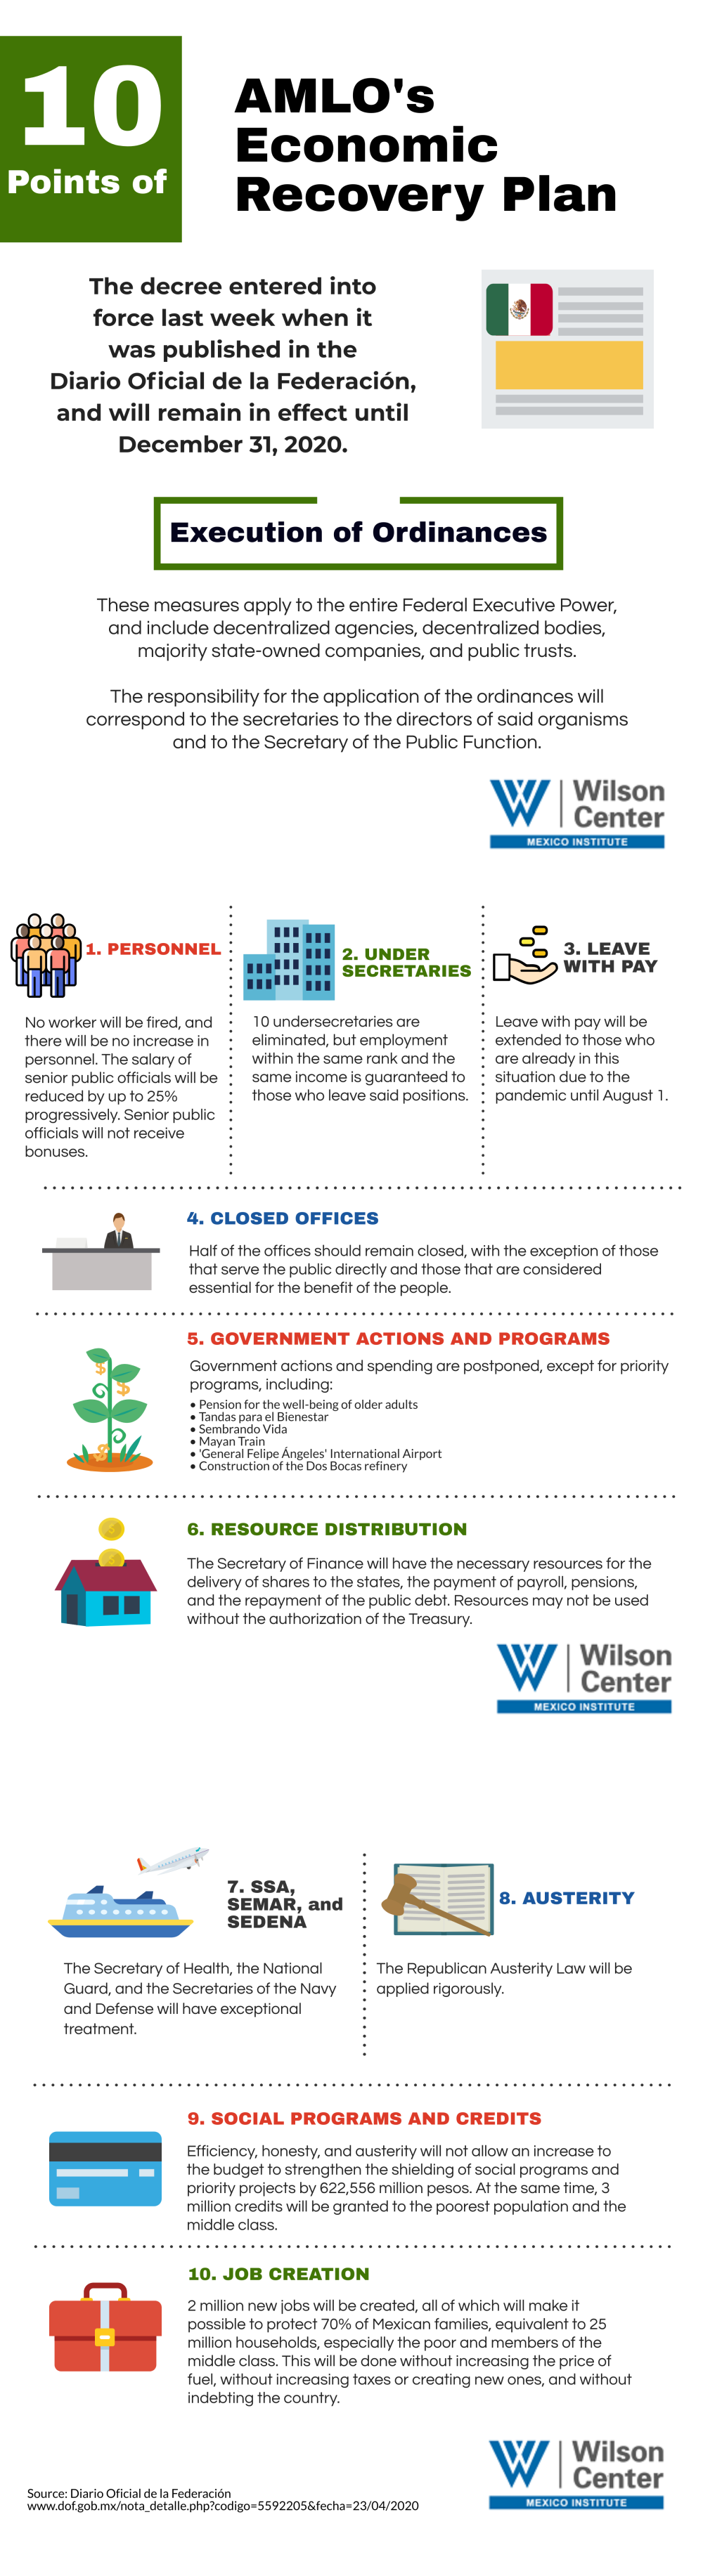 Infographic: AMLO's Economic Recovery Plan